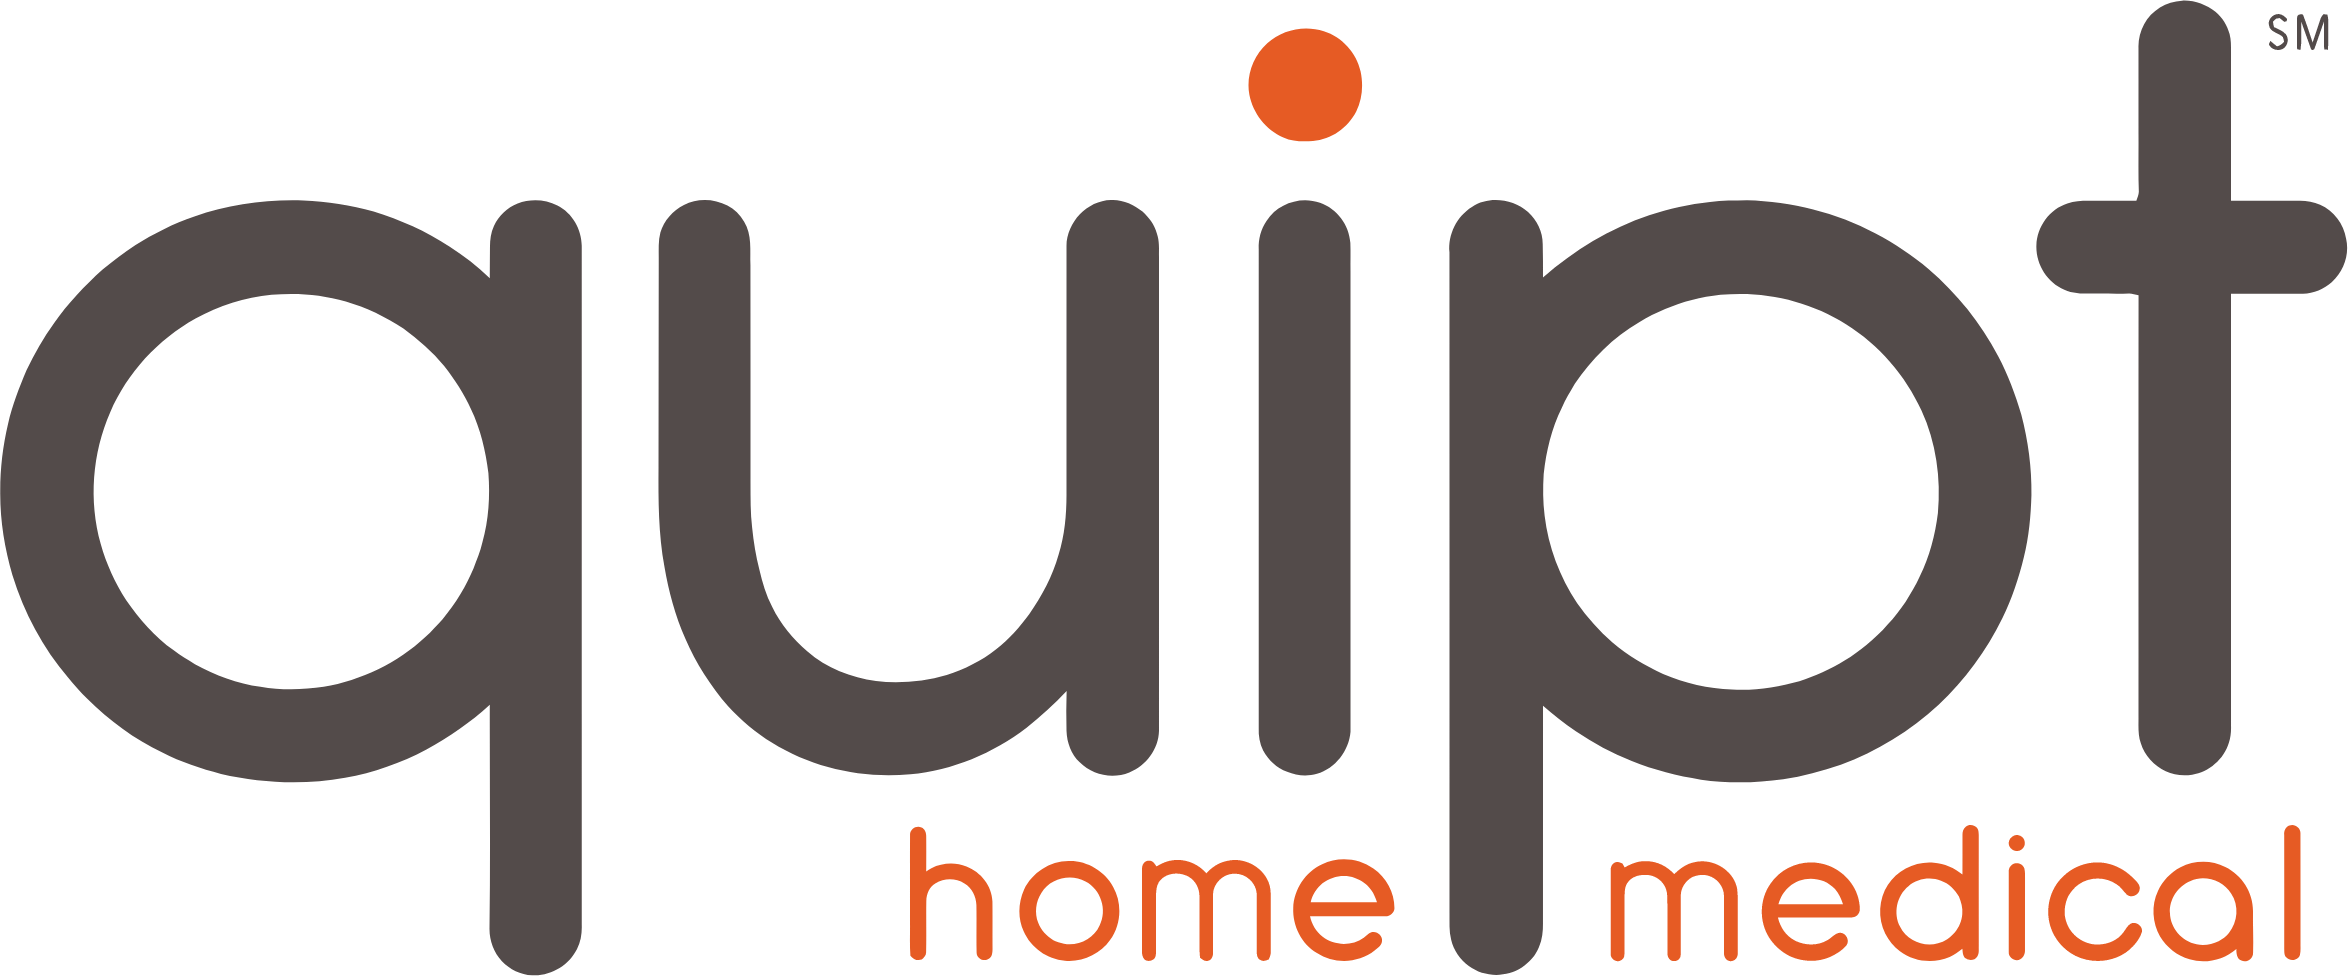 Quipt Home Medical logo large (transparent PNG)